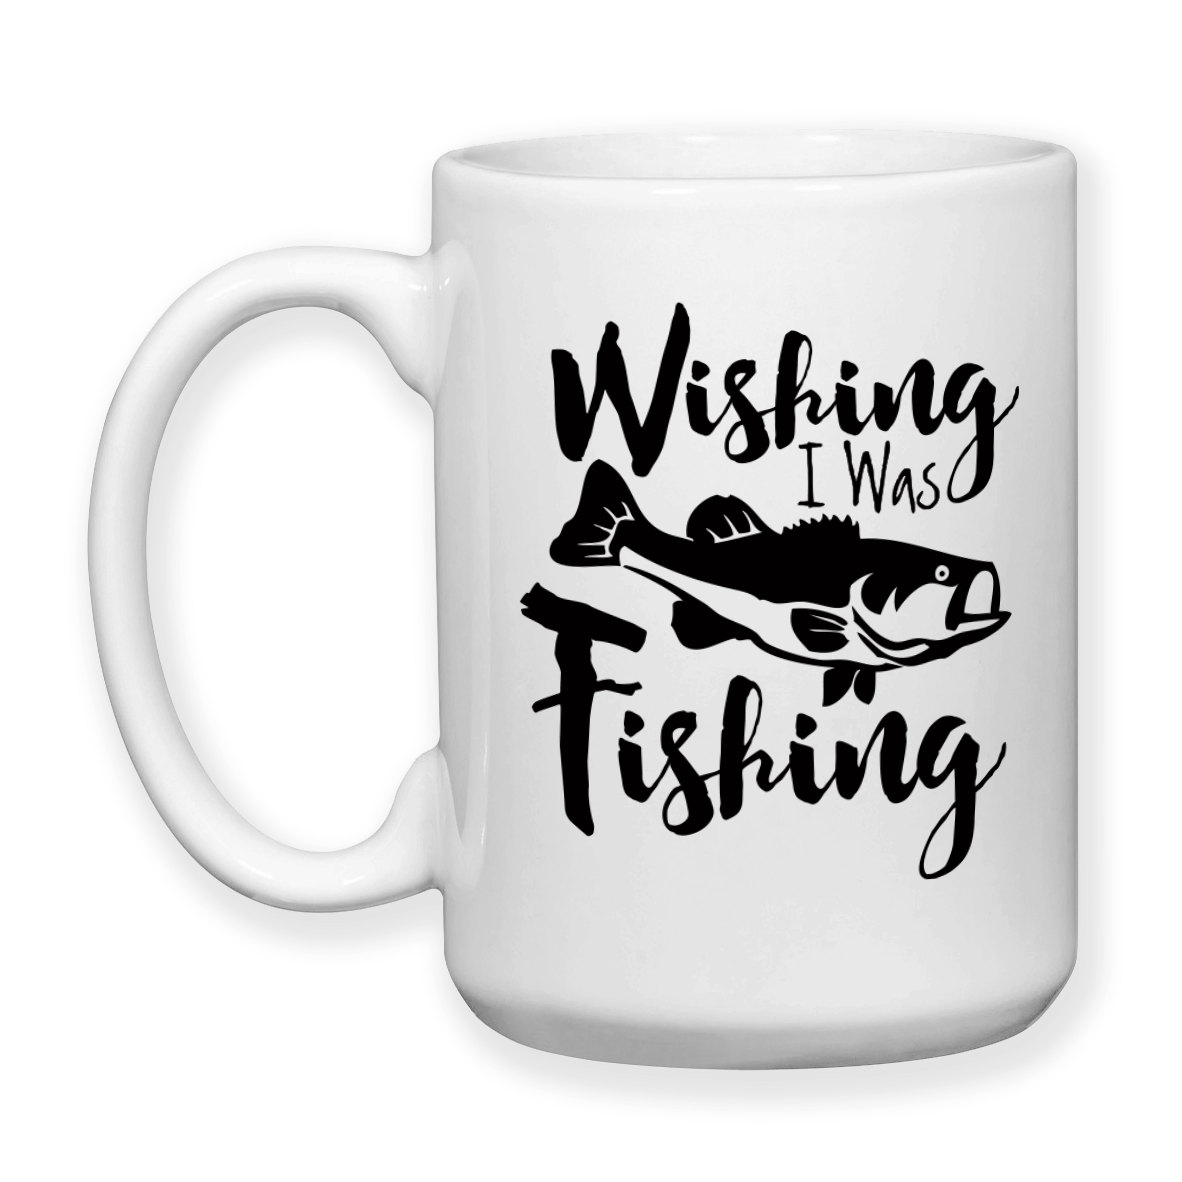 Bass Fishing Mug. Sea Bass Gift. Bass Fishing Gift. Funny Fishing Gift.  Fisherman Gift. Gift For Fisherman. Fishing Gag Gift. Fish Mug #b159